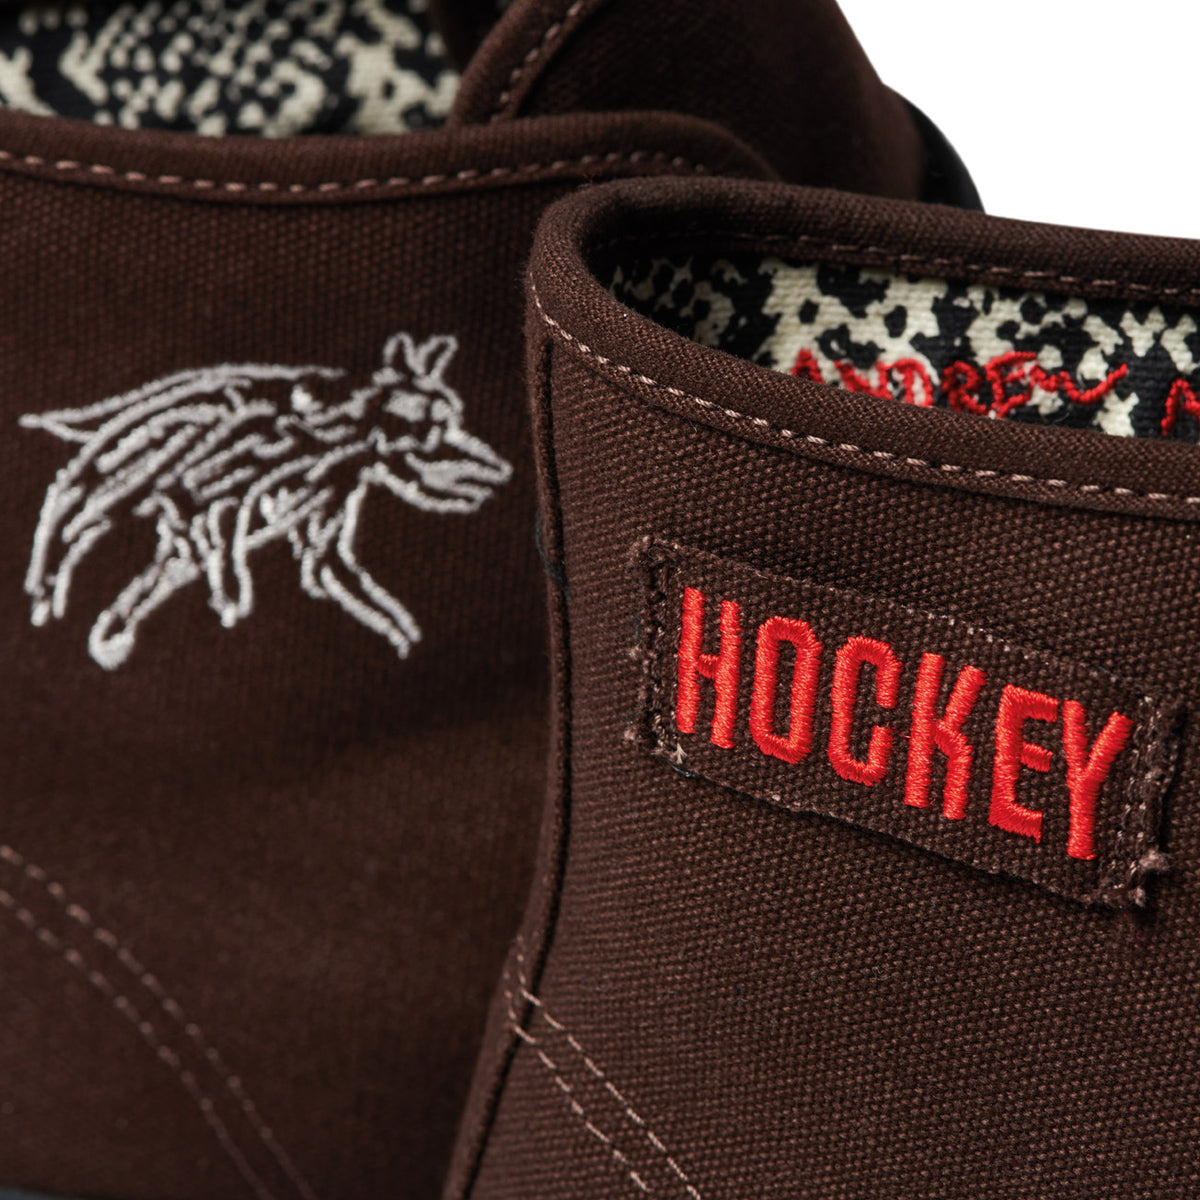 Vans x Hockey Skate Authentic High Shoes - Snake Skin image 2